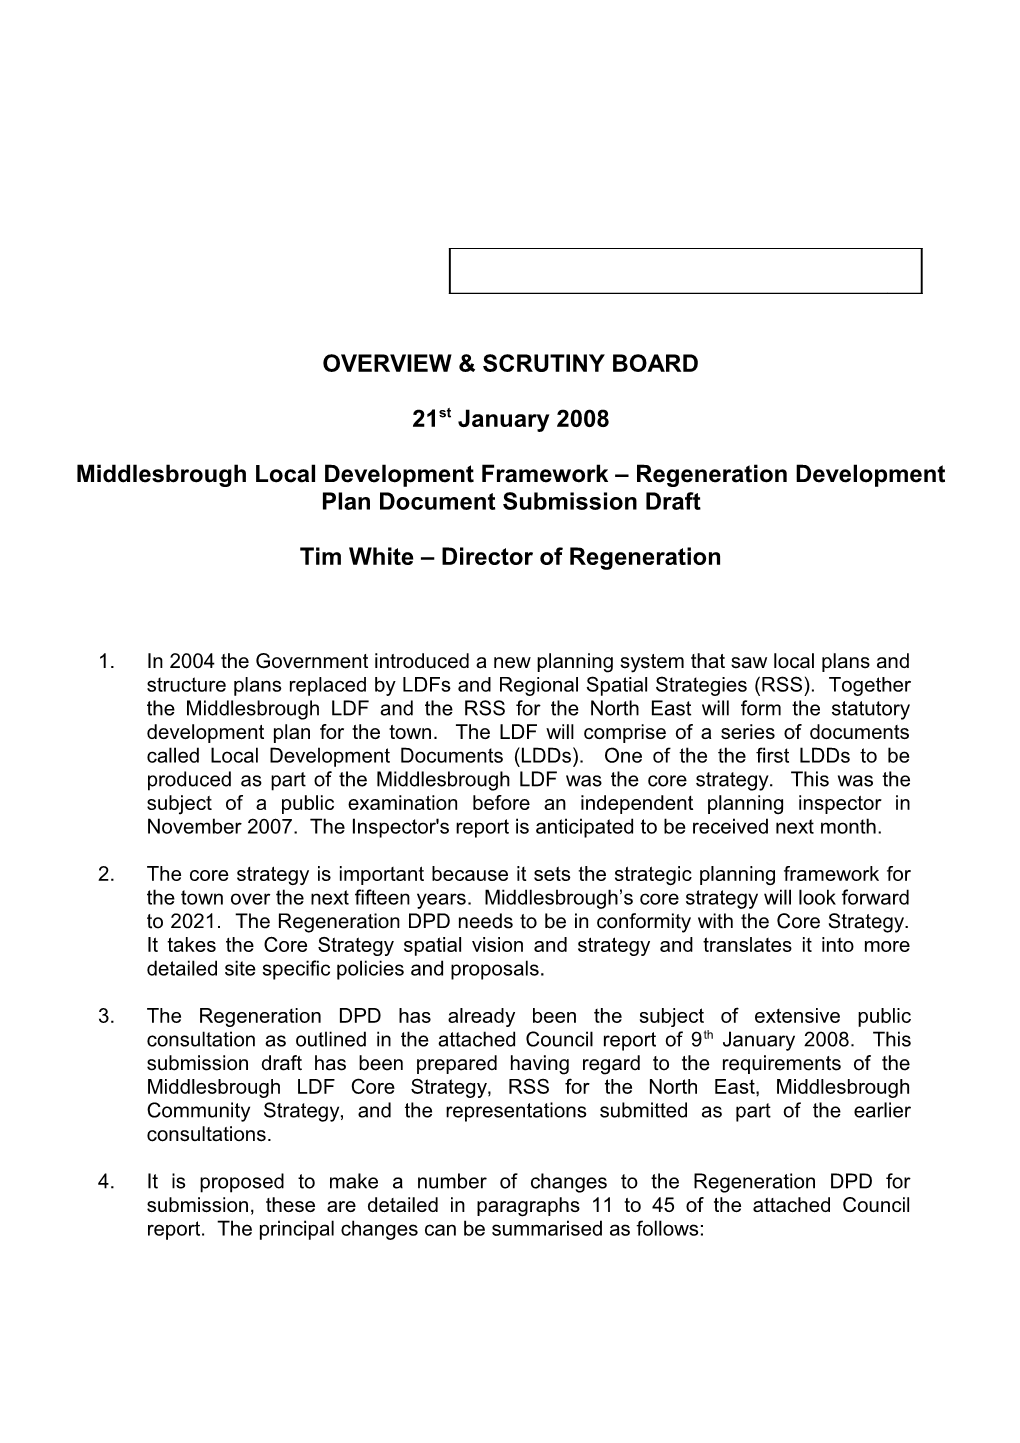 Middlesbrough Local Development Framework Regeneration Development Plan Document Submission